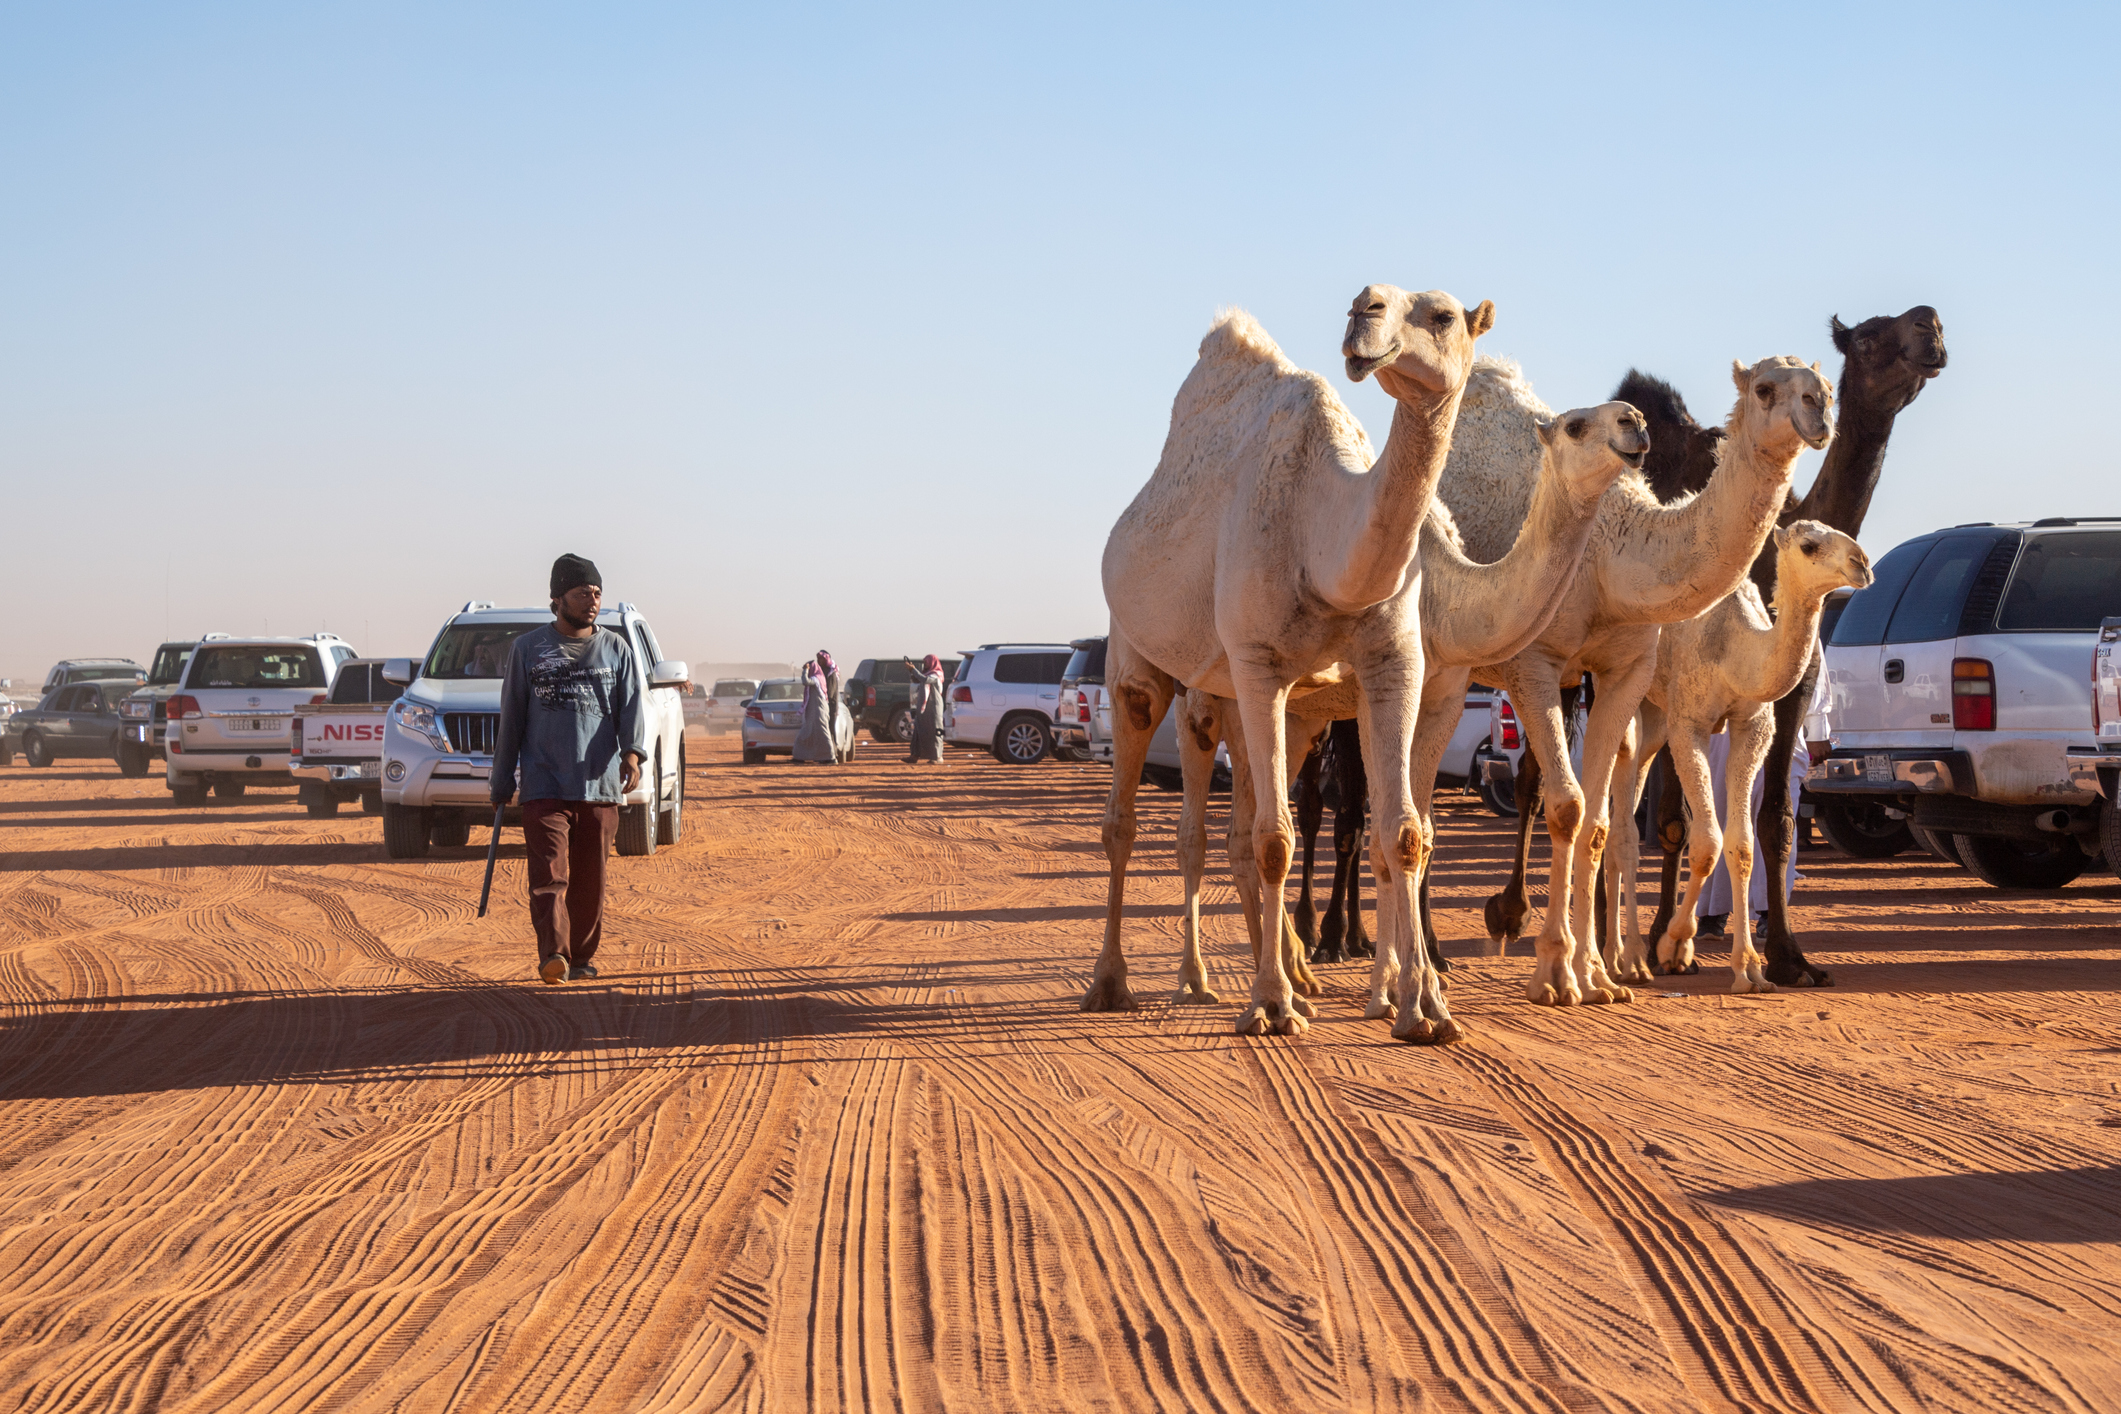 King Abdulaziz Camel Festival